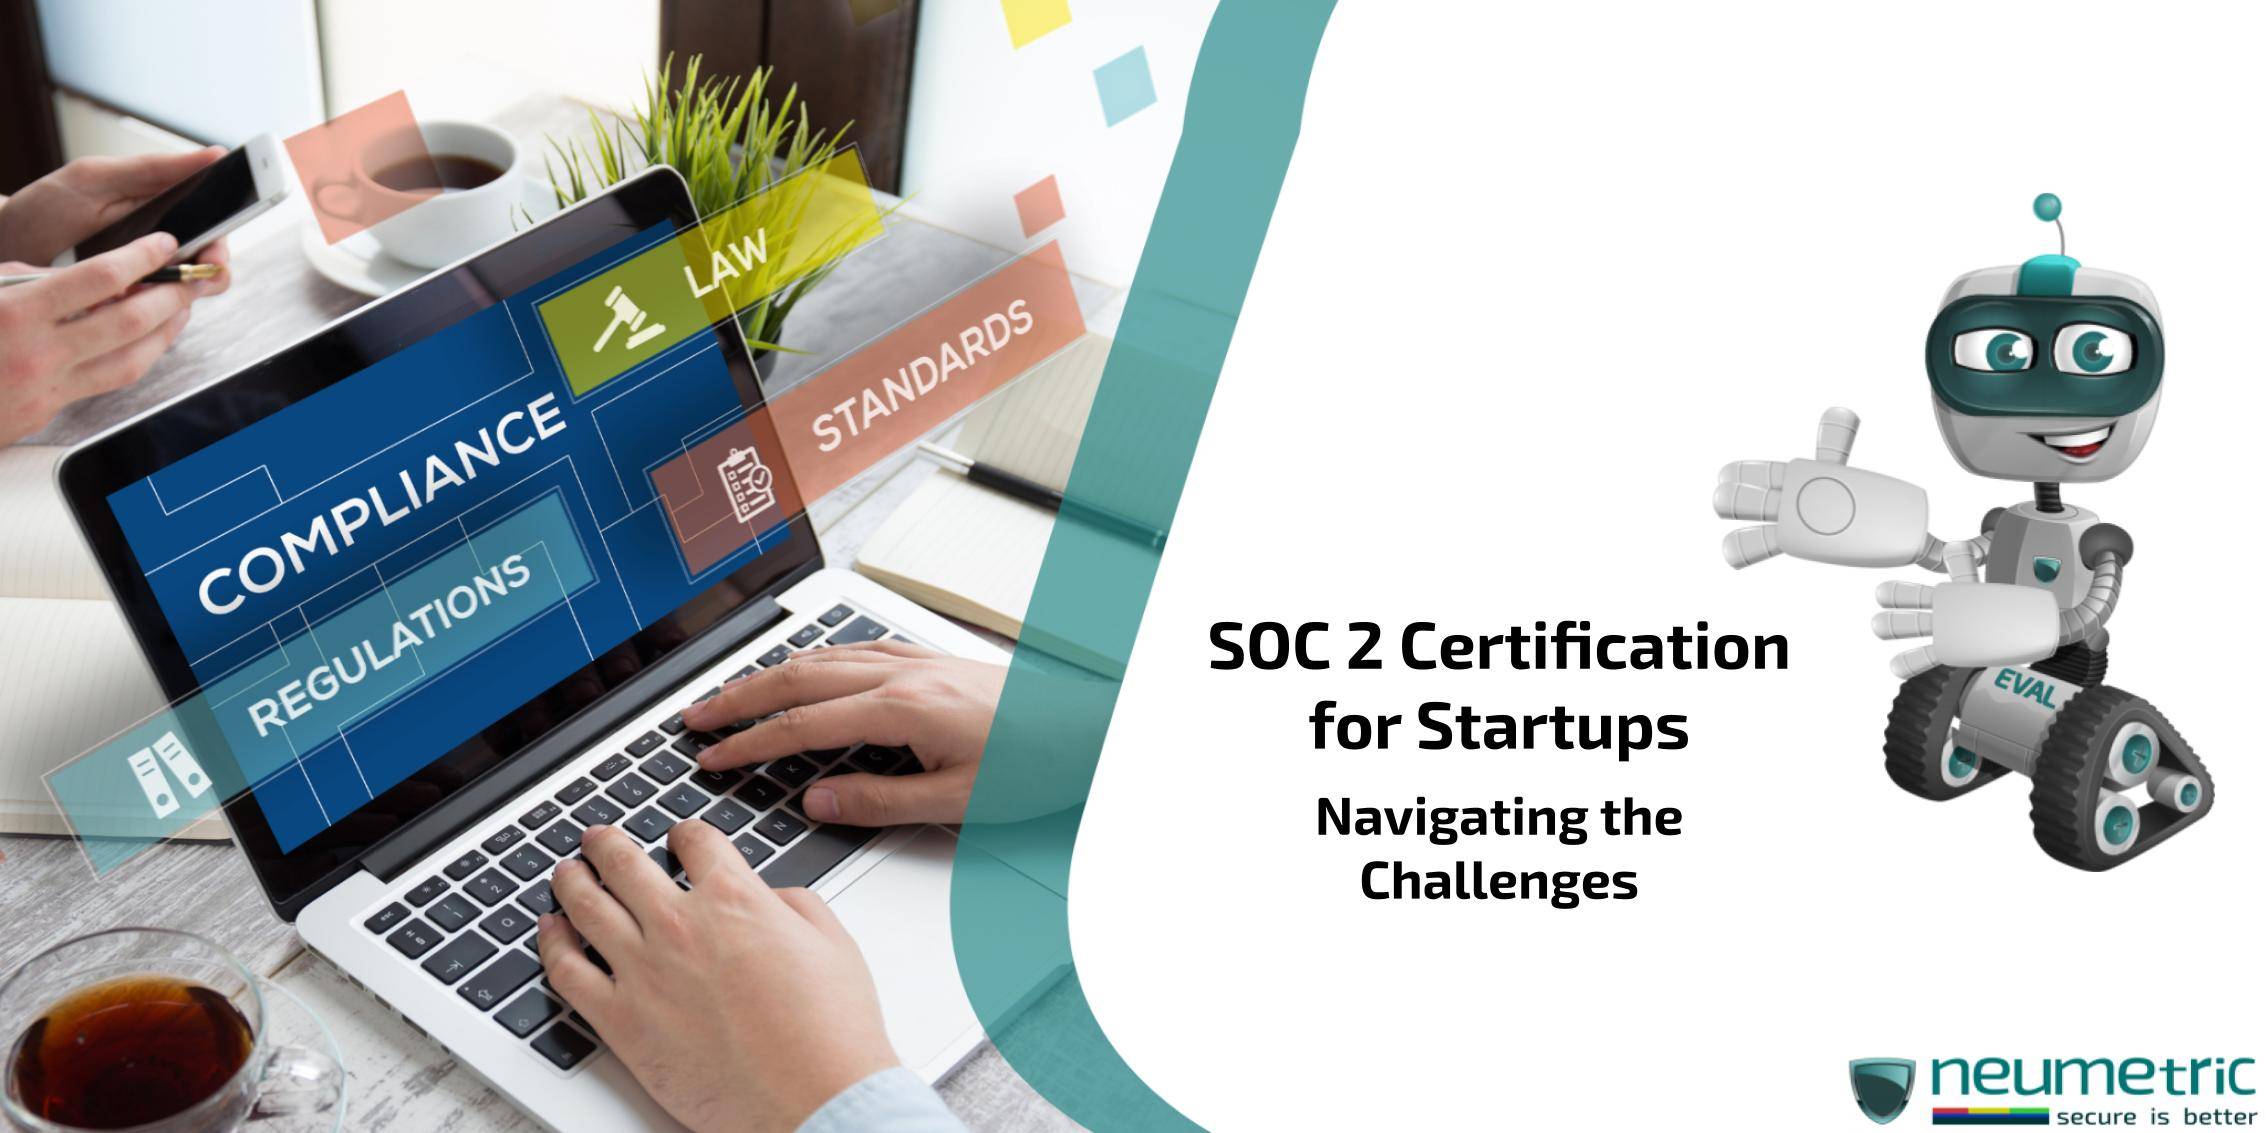 SOC 2 Certification for Startups: Navigating the Challenges